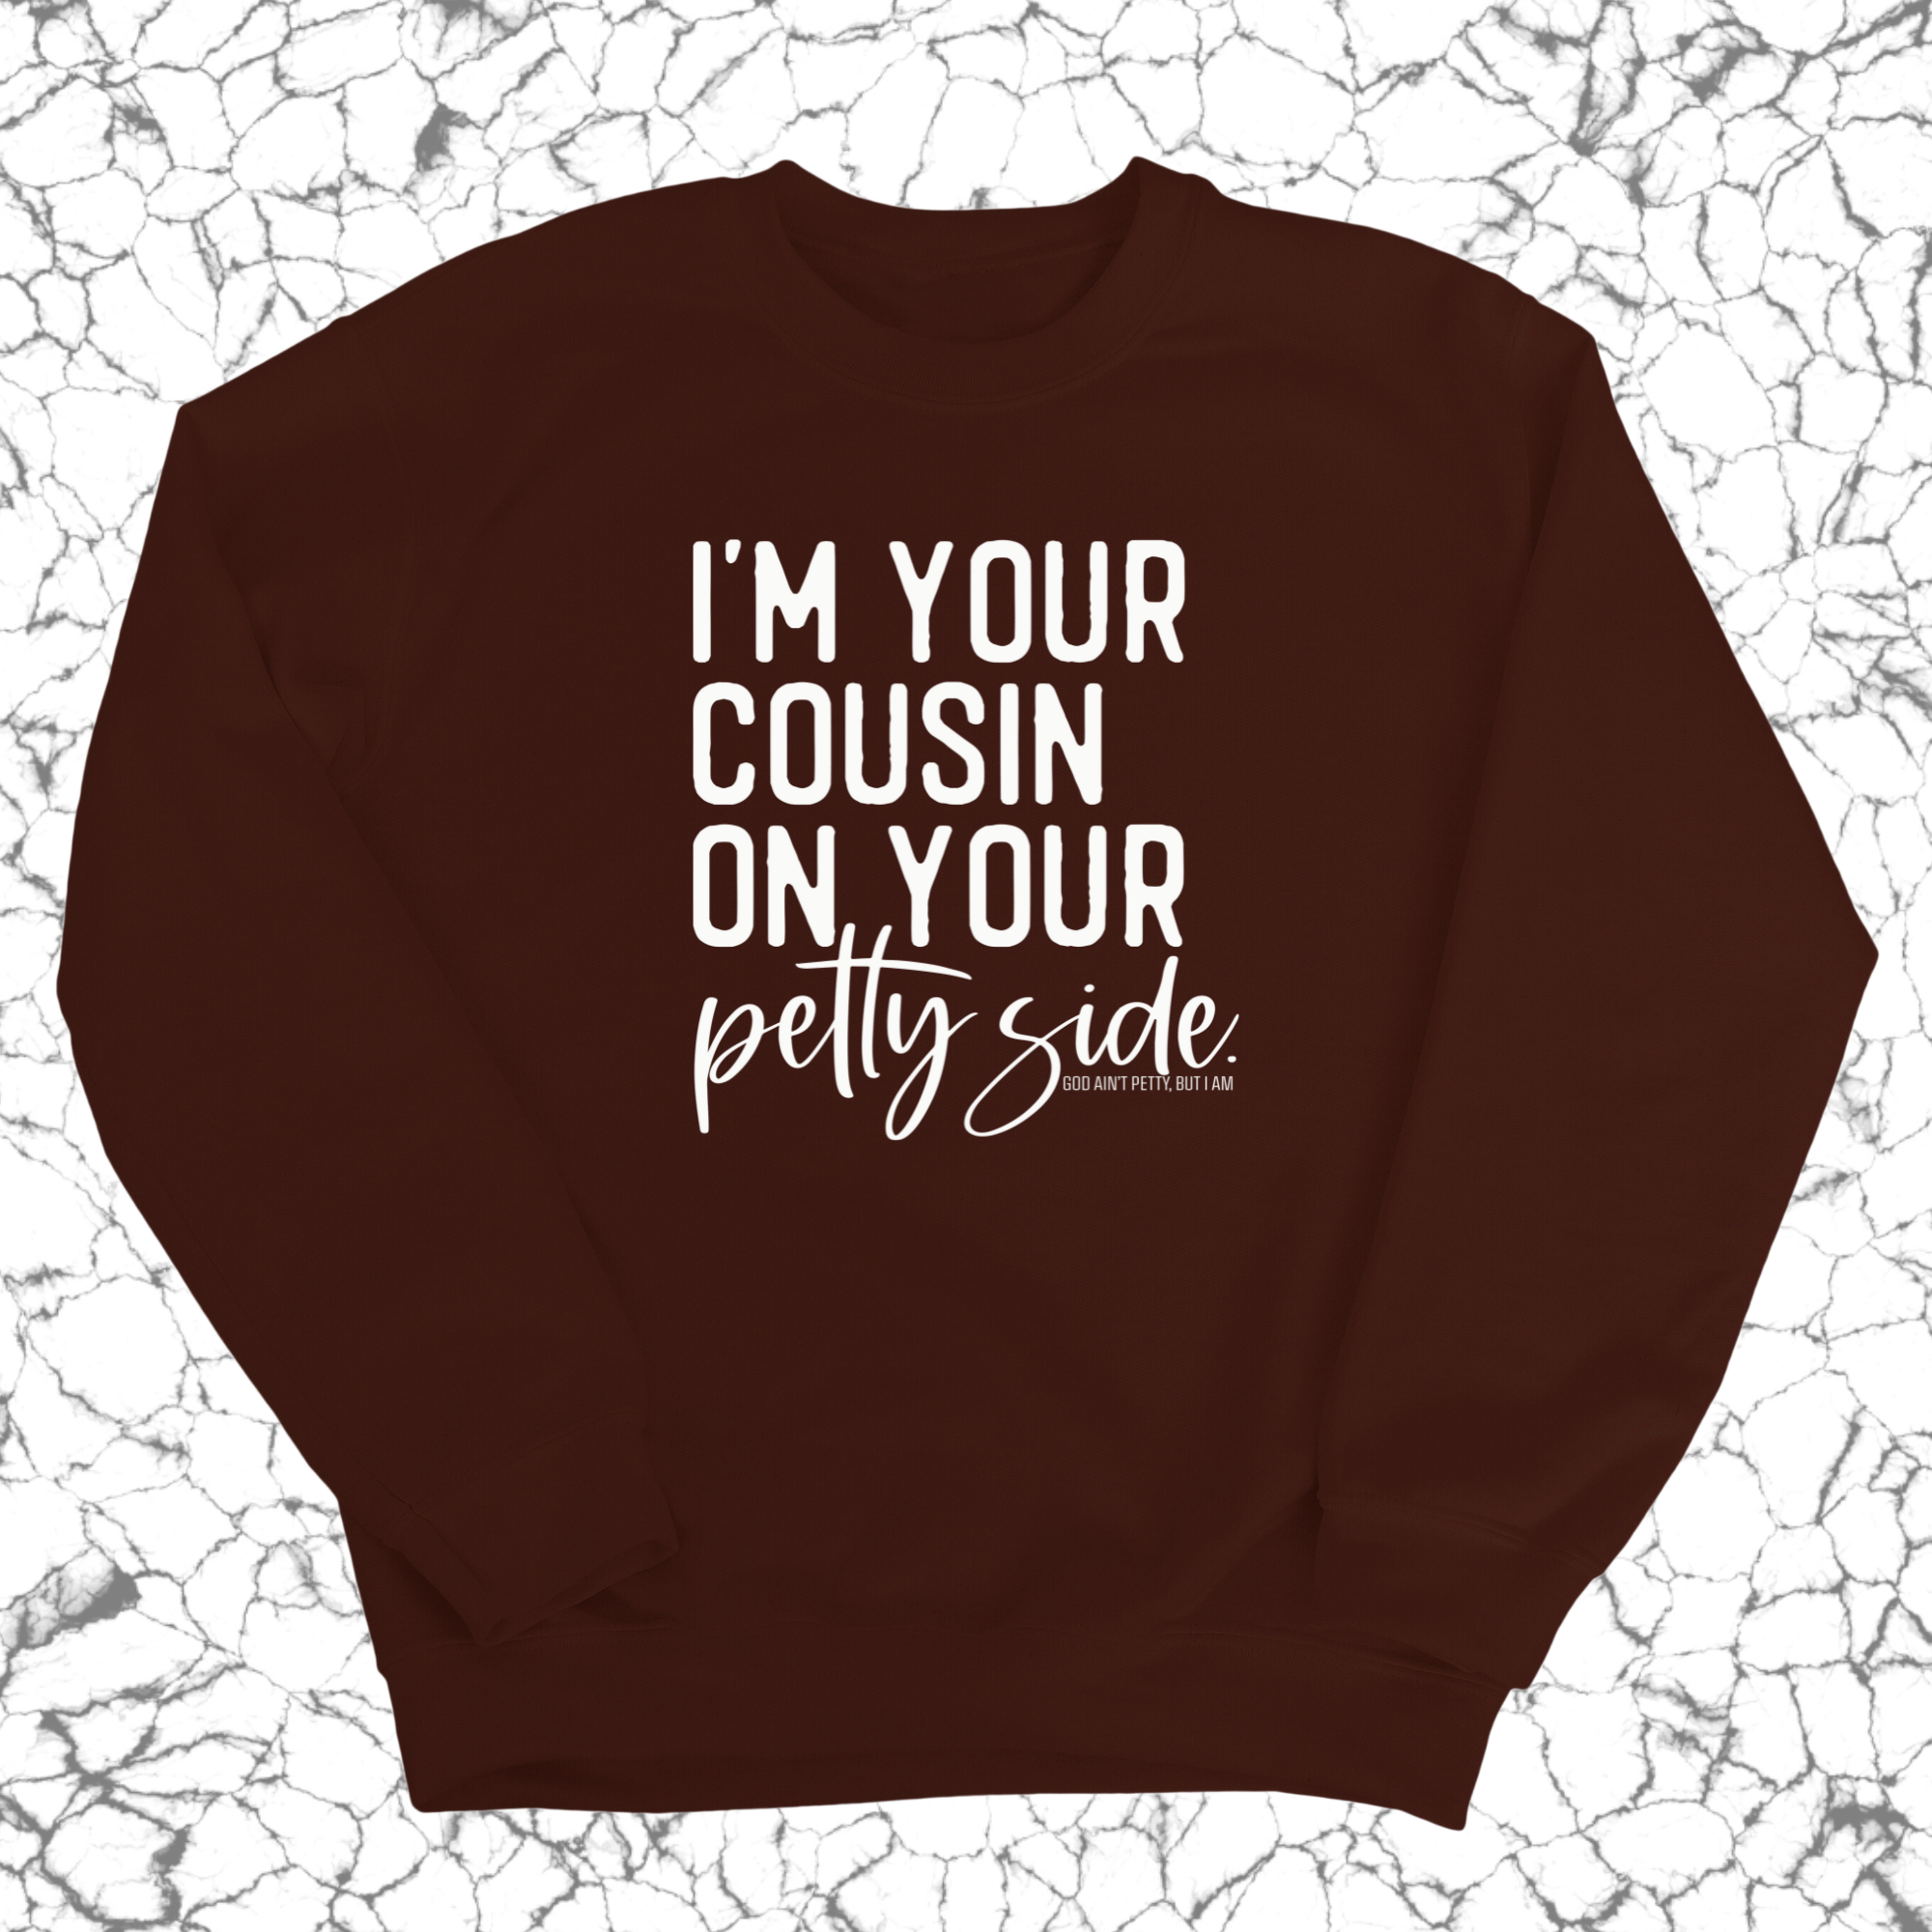 I'm your cousin on your petty side Unisex Sweatshirt-Sweatshirt-The Original God Ain't Petty But I Am